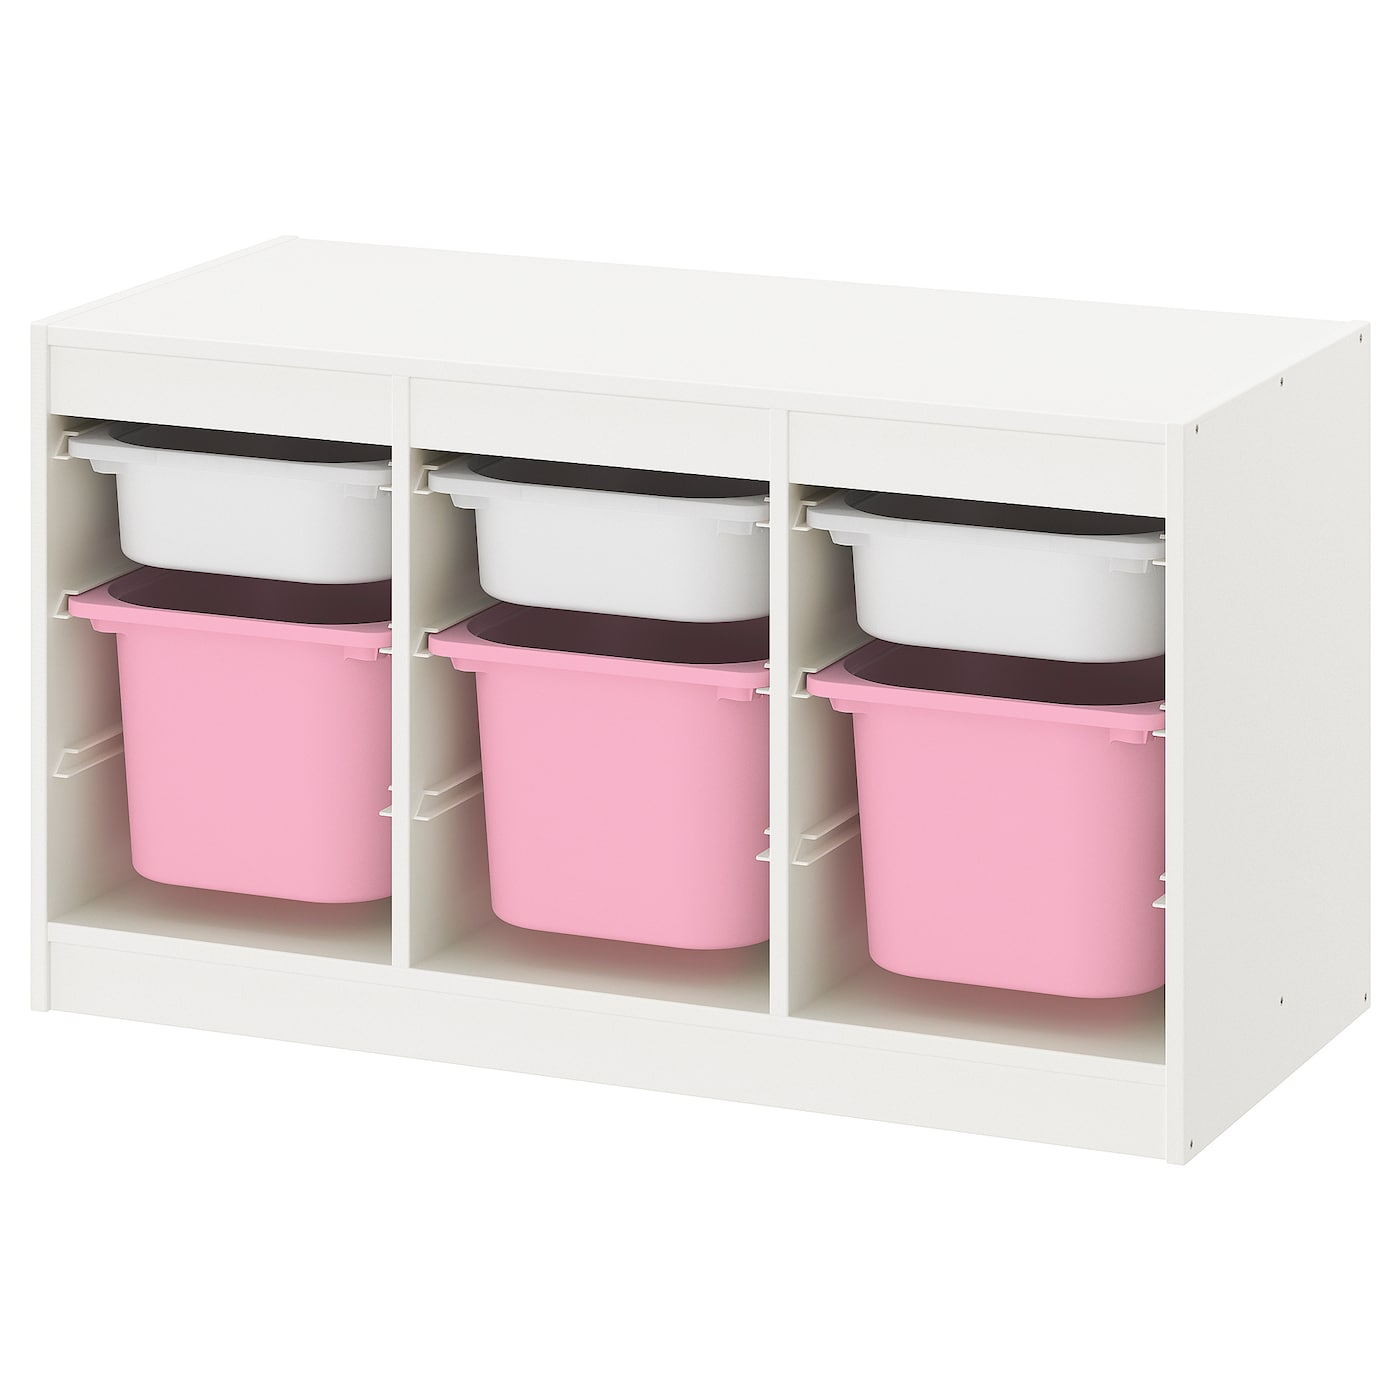 Стеллаж - IKEA TROFAST, 99х44х56 см, белый/розовый, ТРУФАСТ ИКЕА